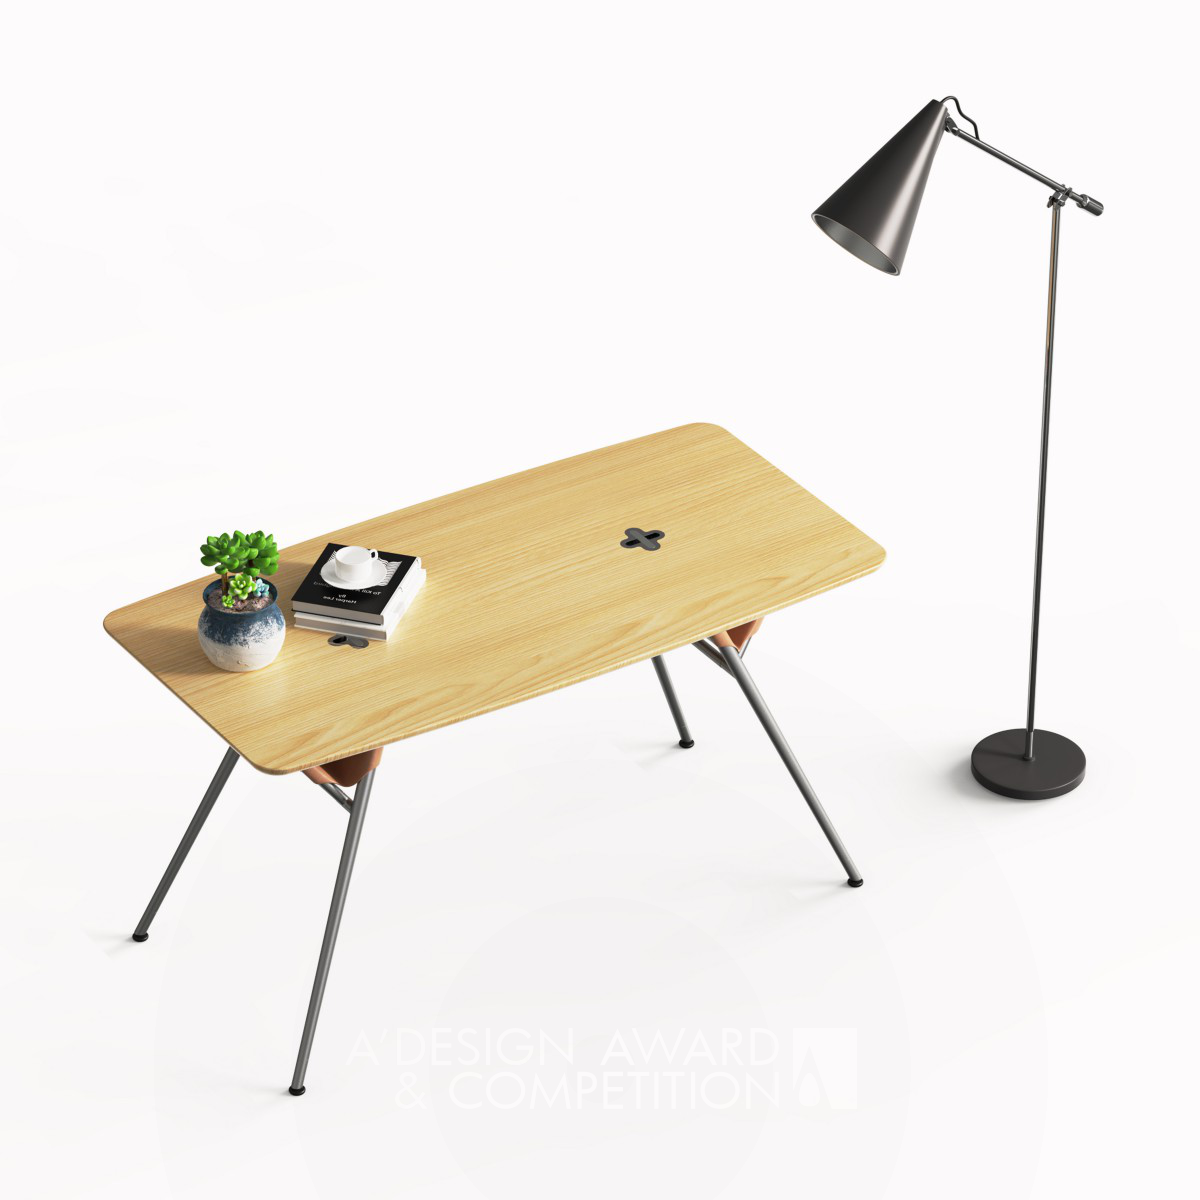 Xu Le wins Iron at the prestigious A' Furniture Design Award with Double Ten Desk.